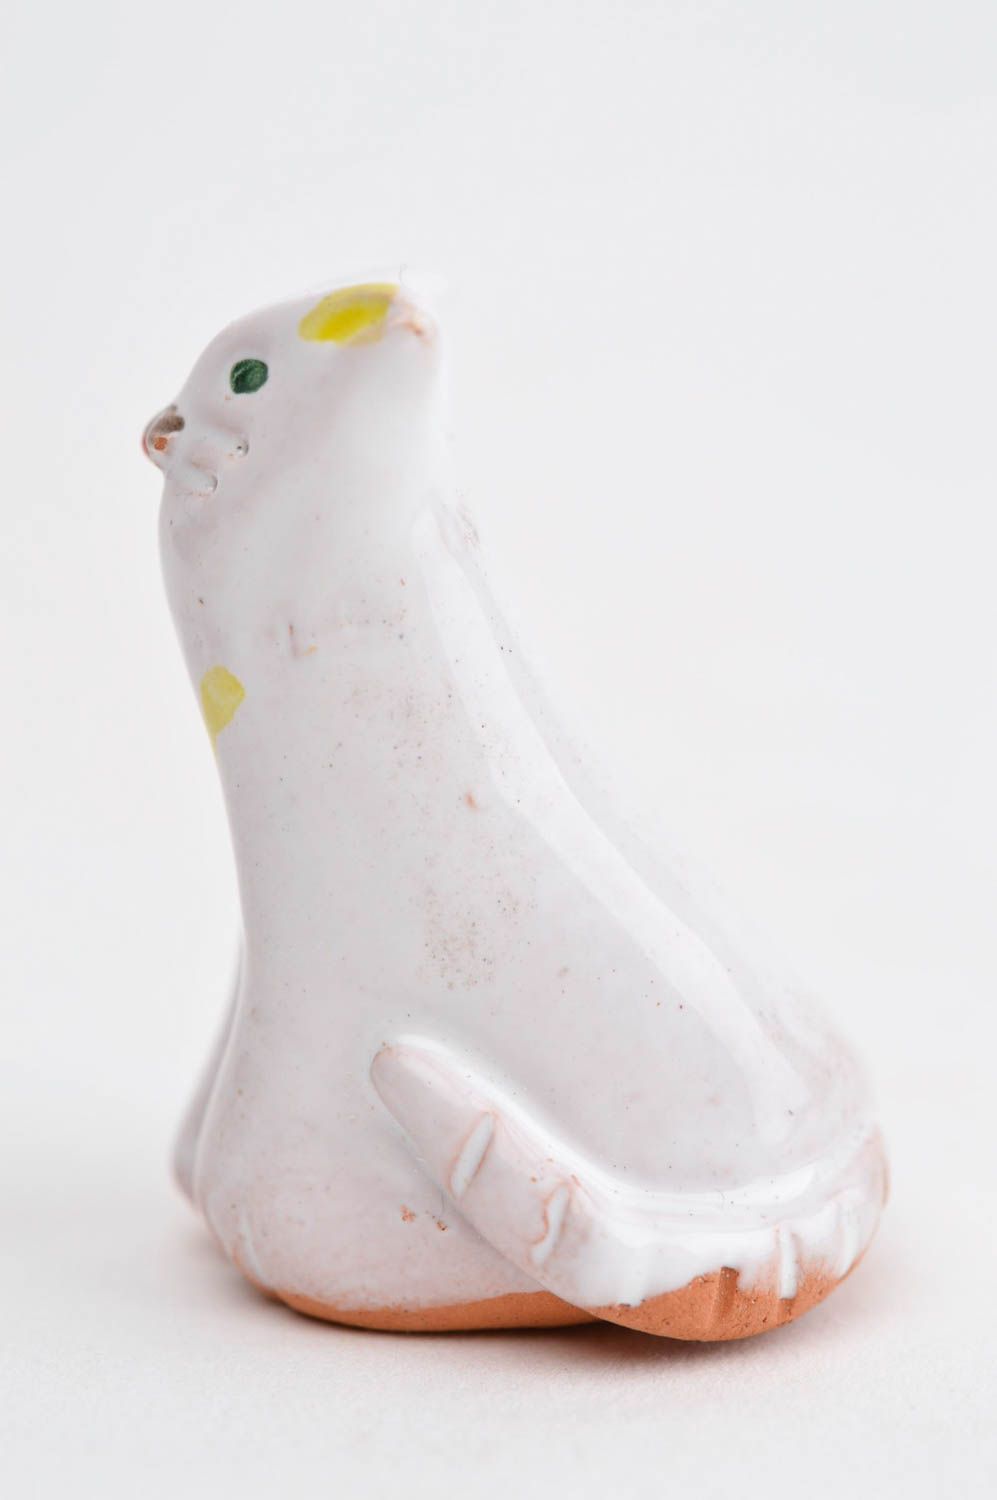 Handmade Keramik Deko Figur aus Ton Tier Statue Miniatur Figur weiße Katze schön foto 9